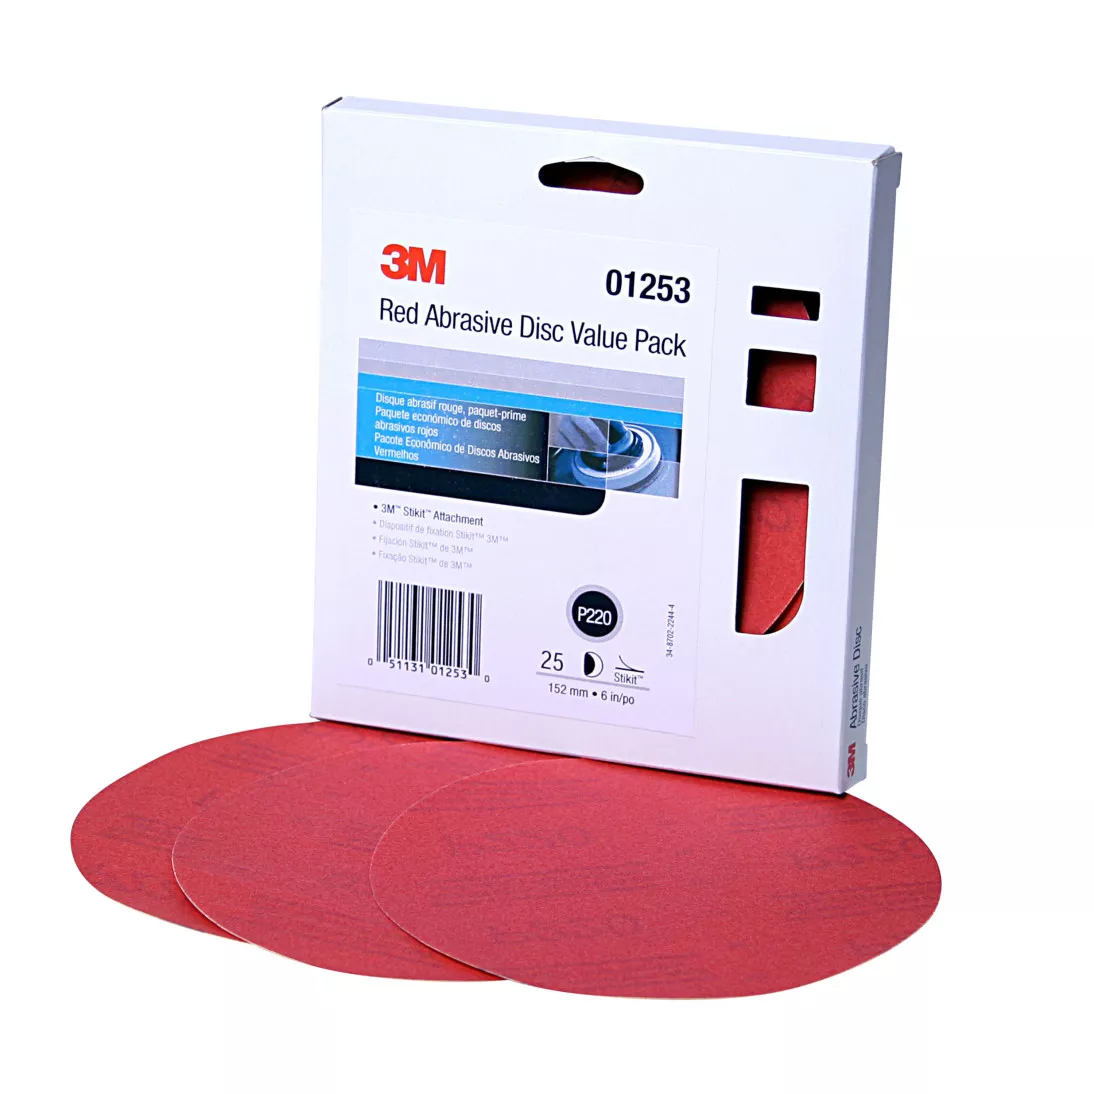 3M™ Red Abrasive Stikit™ Disc Value Pack, 01253, 6 in, P220 grade, 25
discs per carton, 4 cartons per case